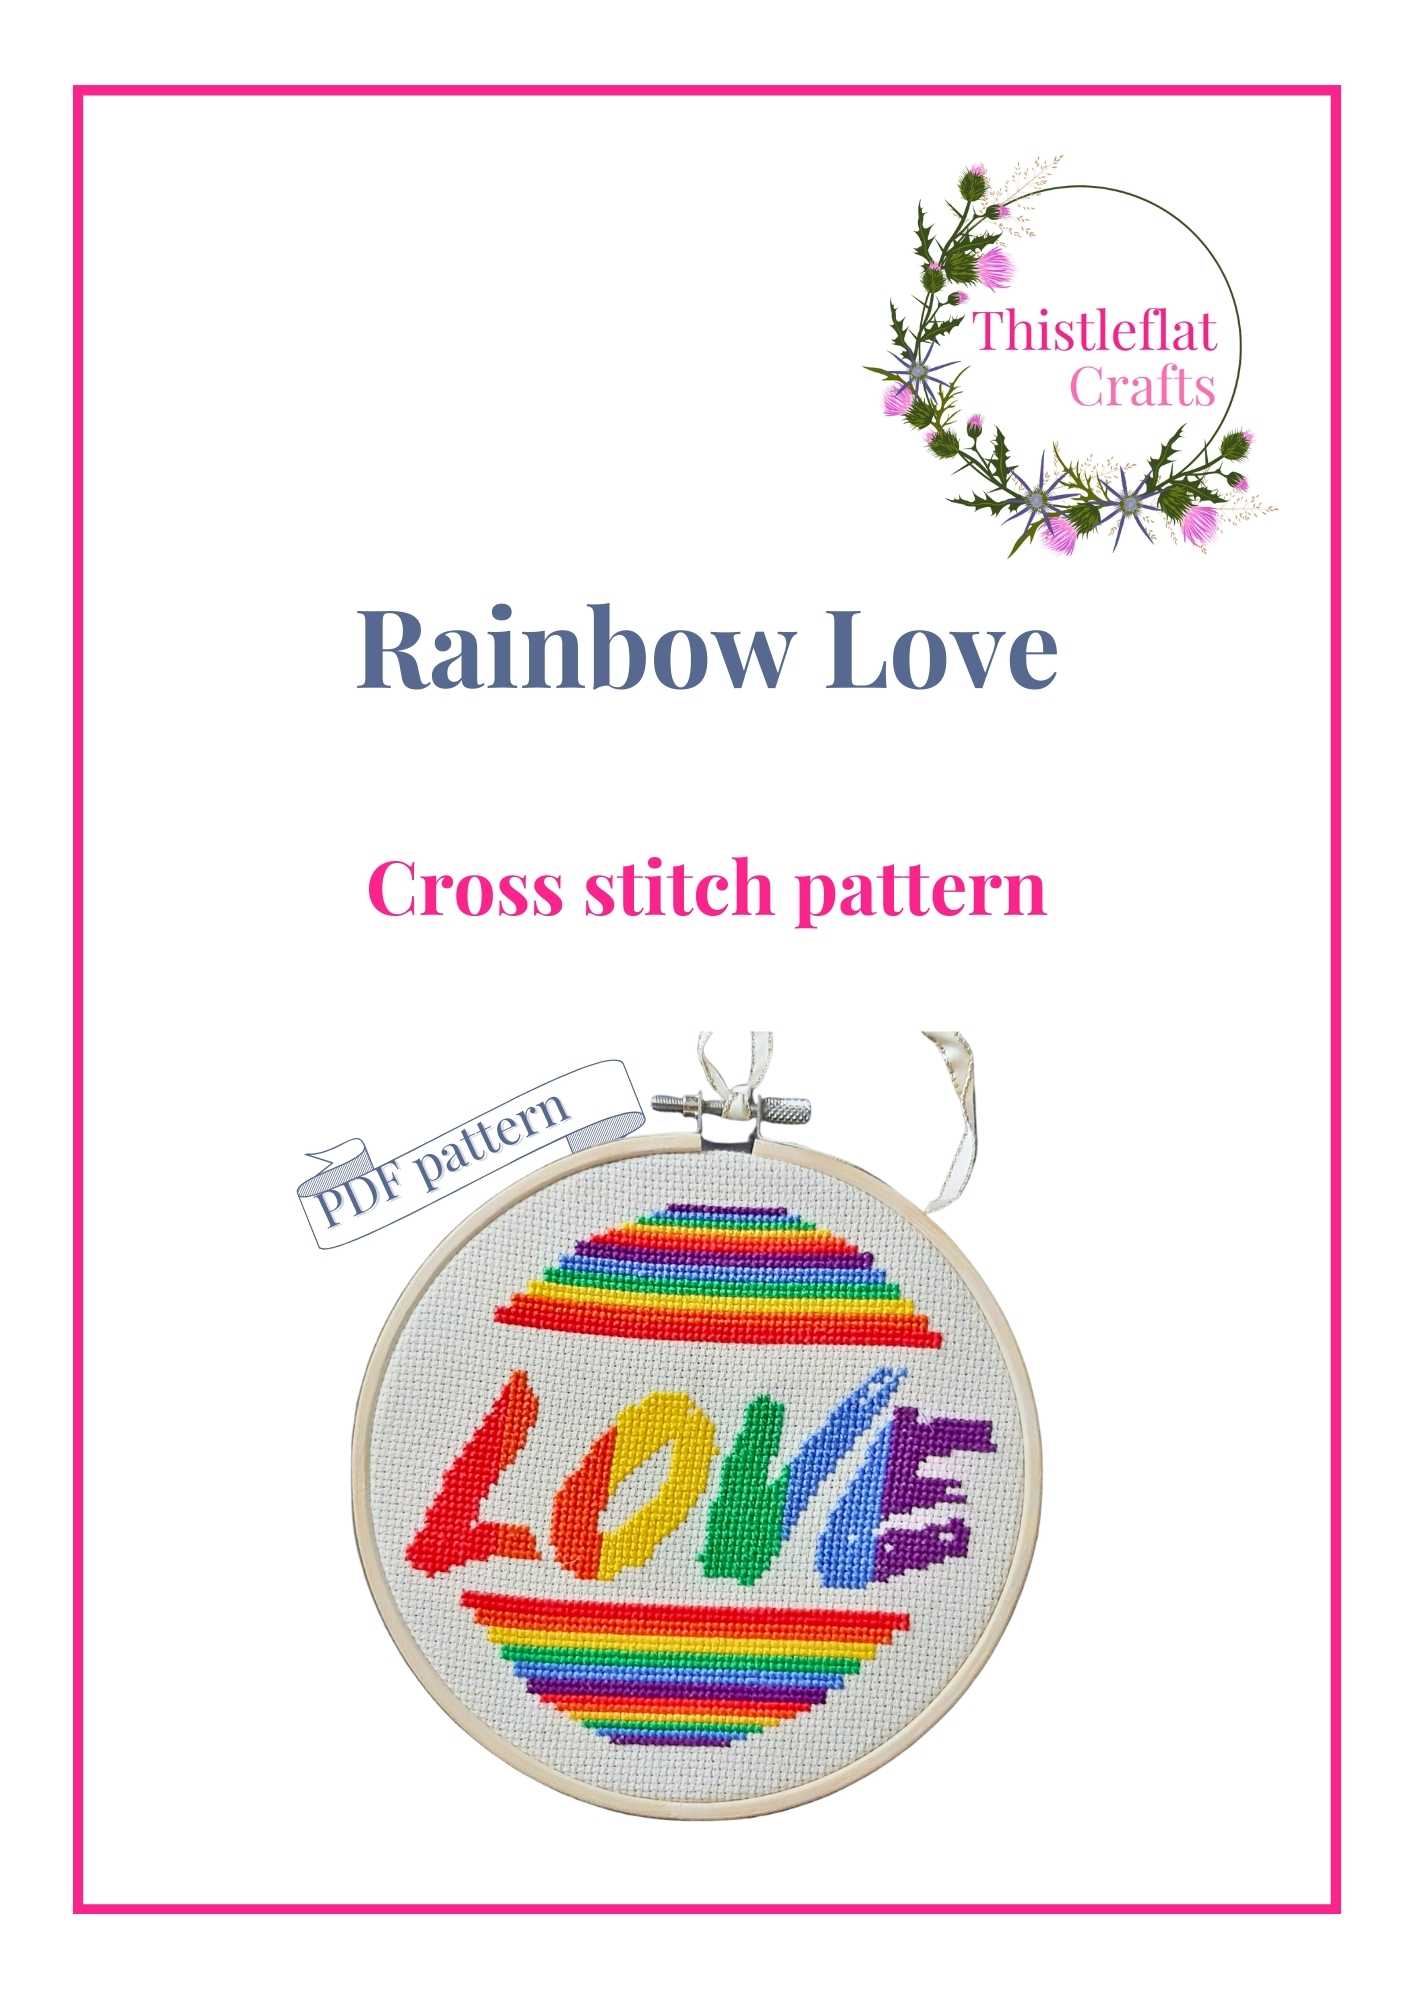 Rainbow Love cross stitch pattern pdf download - Thistleflat Crafts